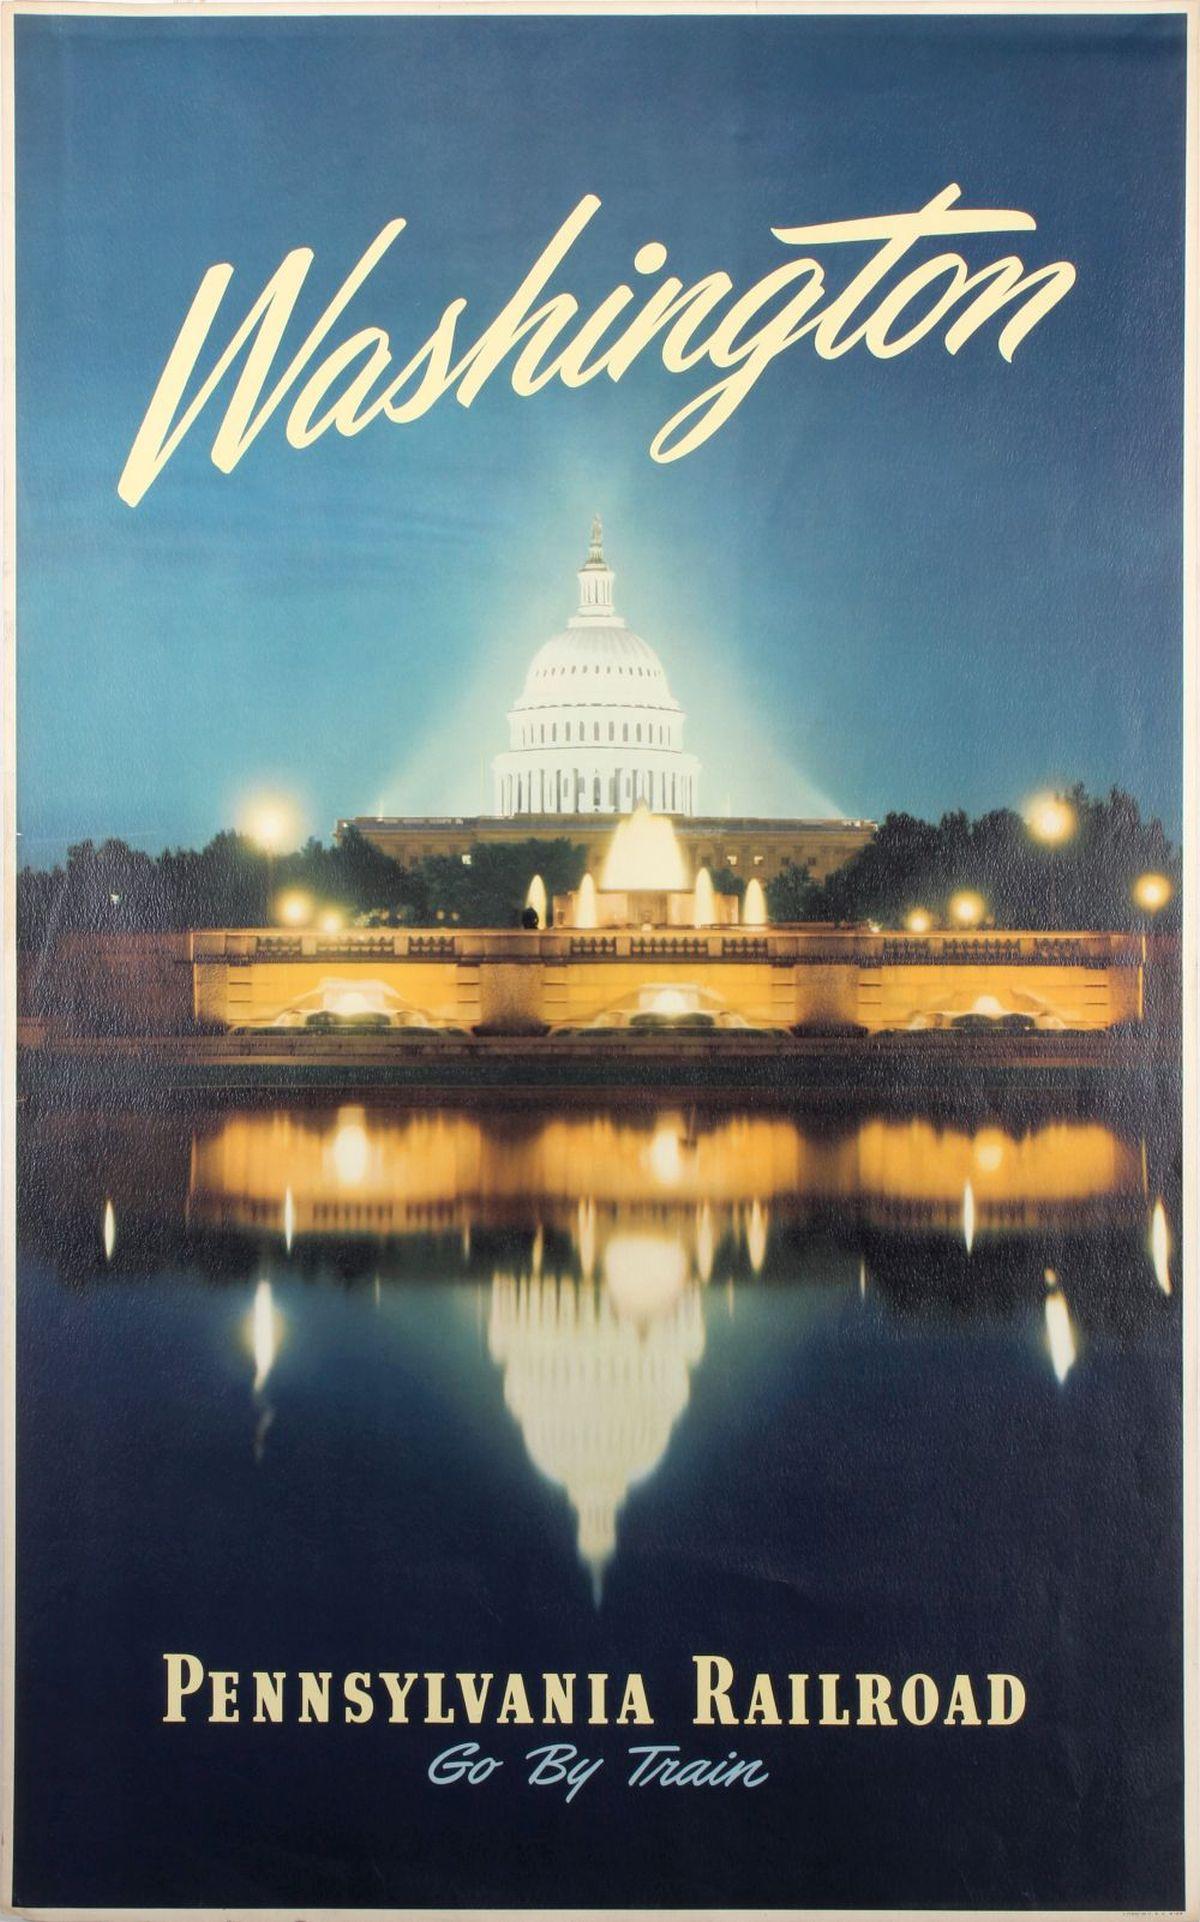 "Washington/ Pennsylvania Railroad/ Go By Train" Vintage Travel Poster, 1949 - The Great Republic